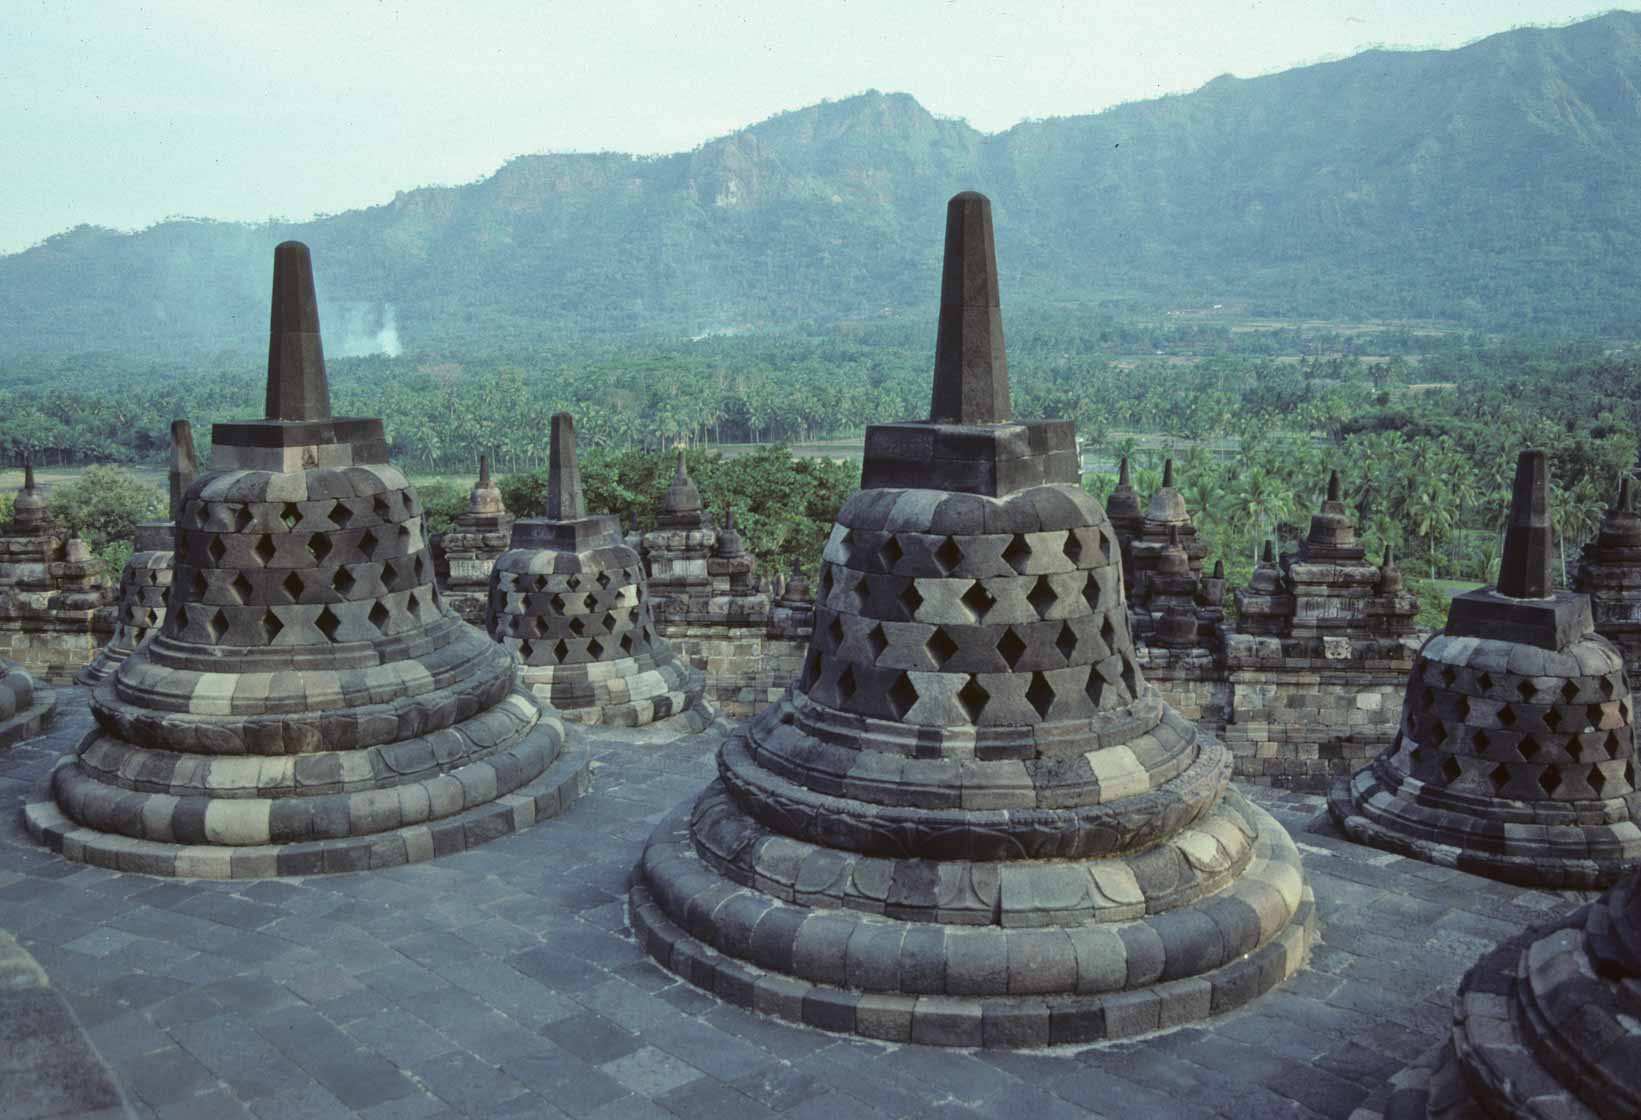 <span style="font-family: Verdana; font-size: 16px; color: ">Borobudur</span>